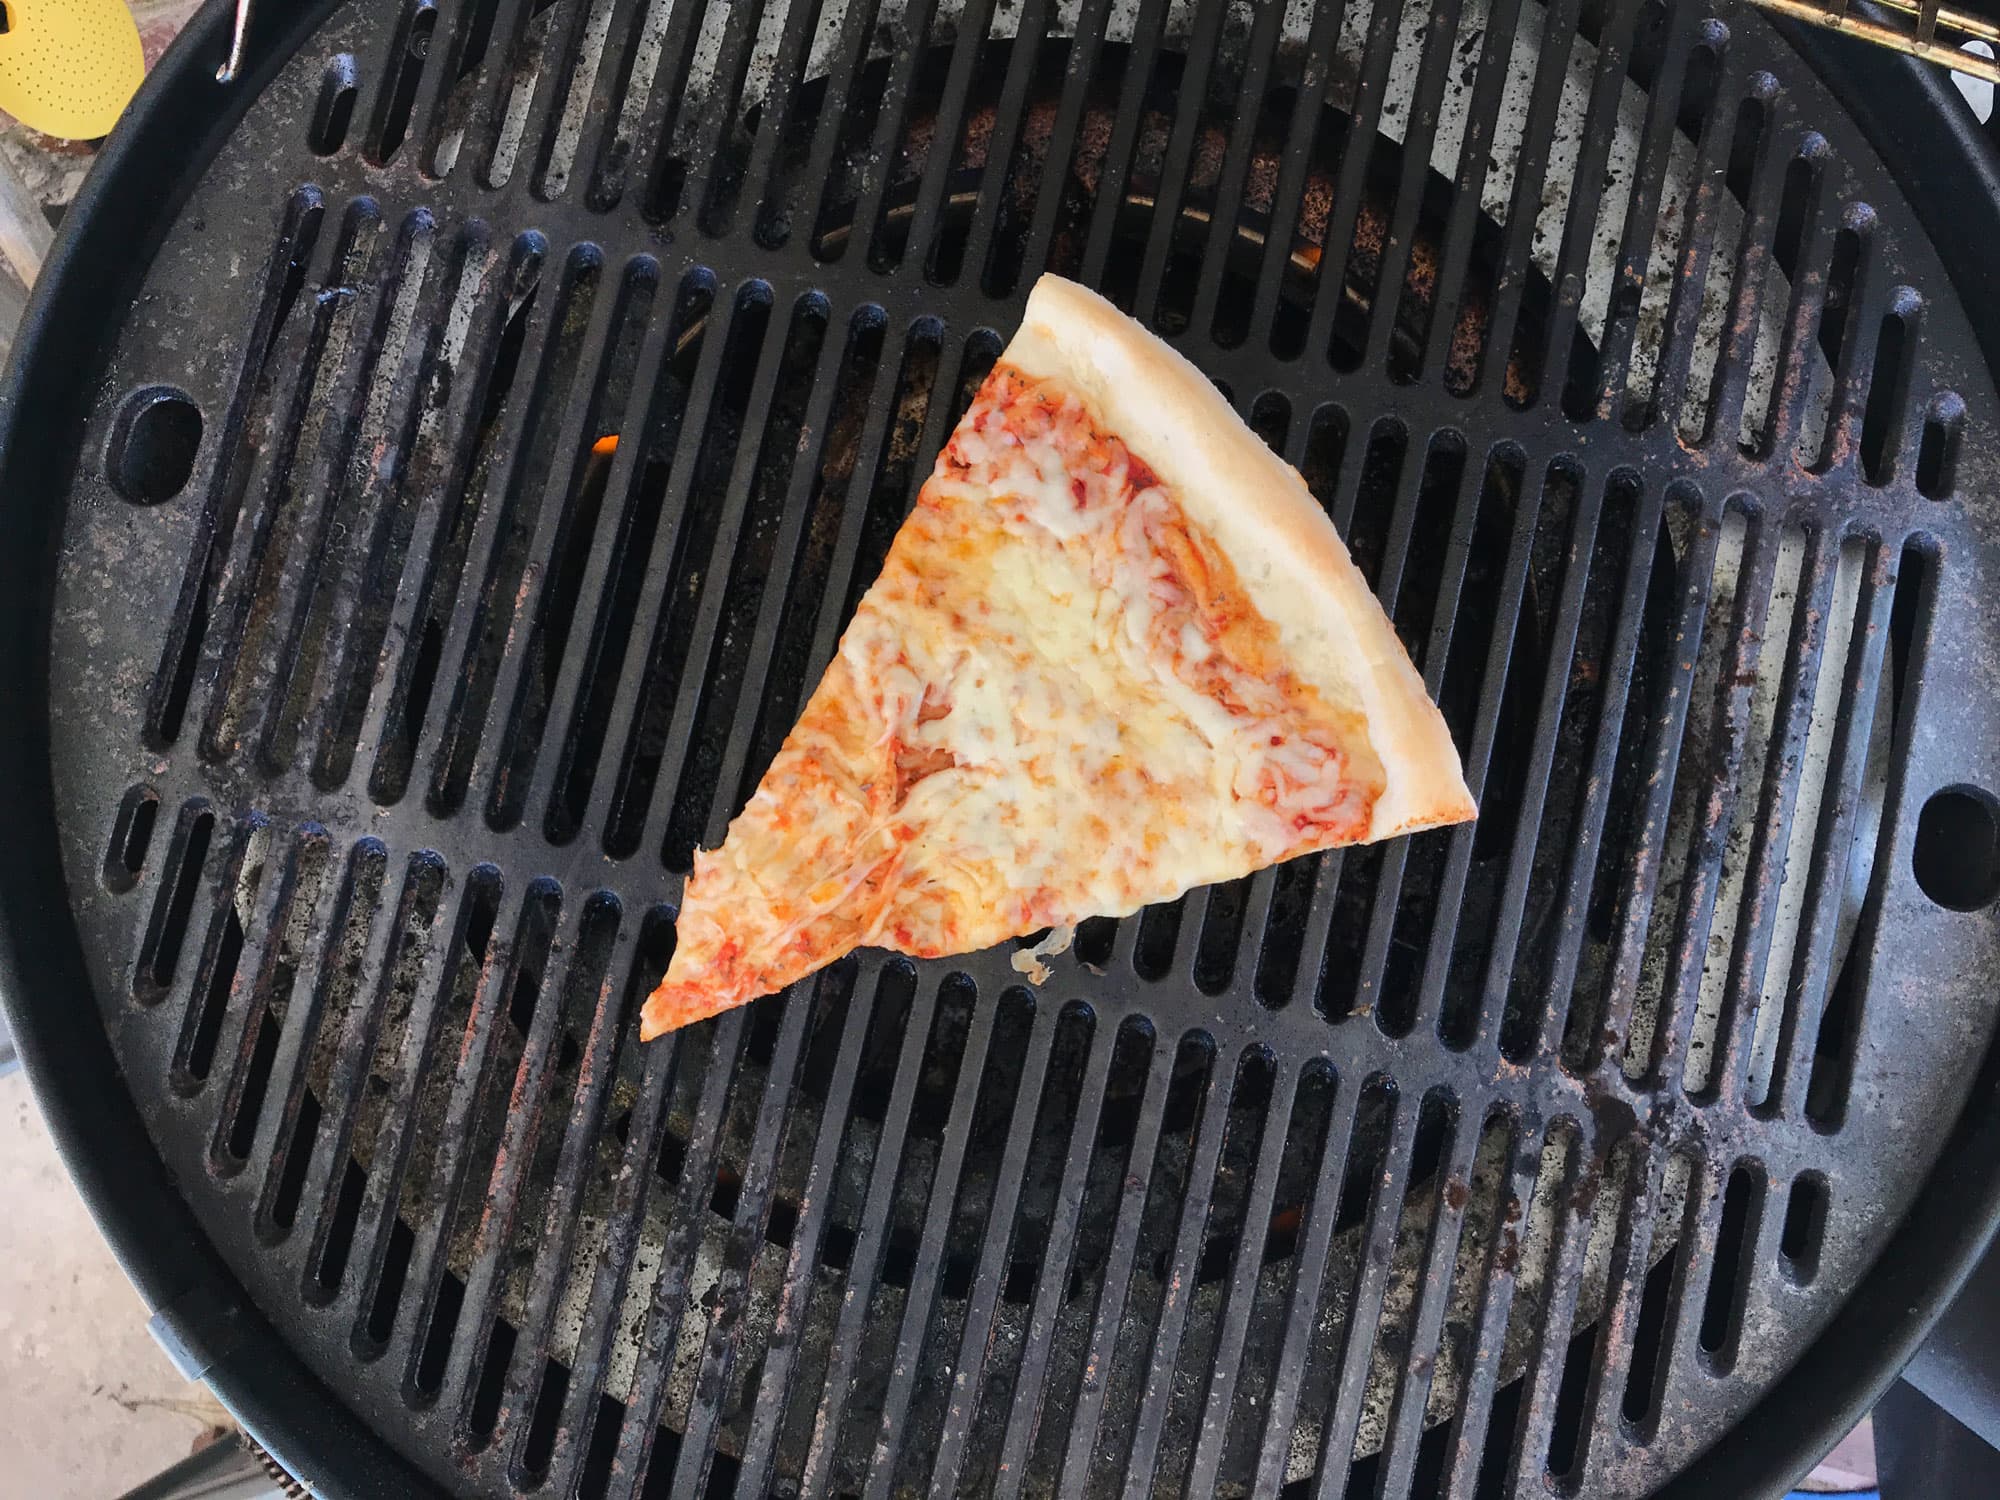 The Best Way to Reheat Pizza (5 Methods)